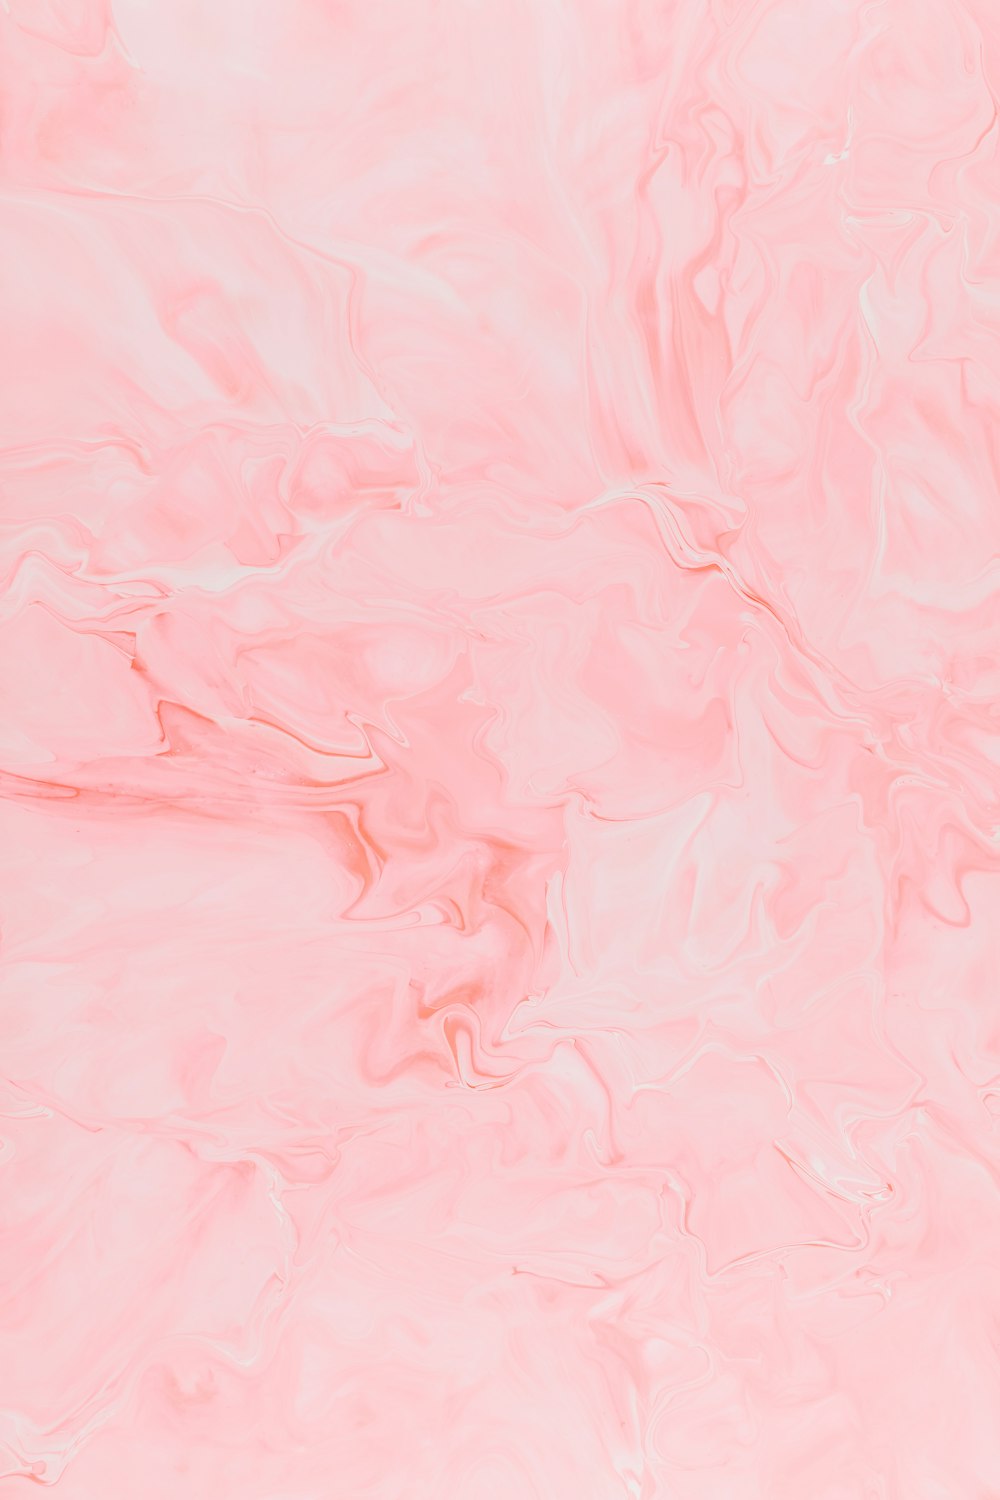 peinture abstraite rose et blanche